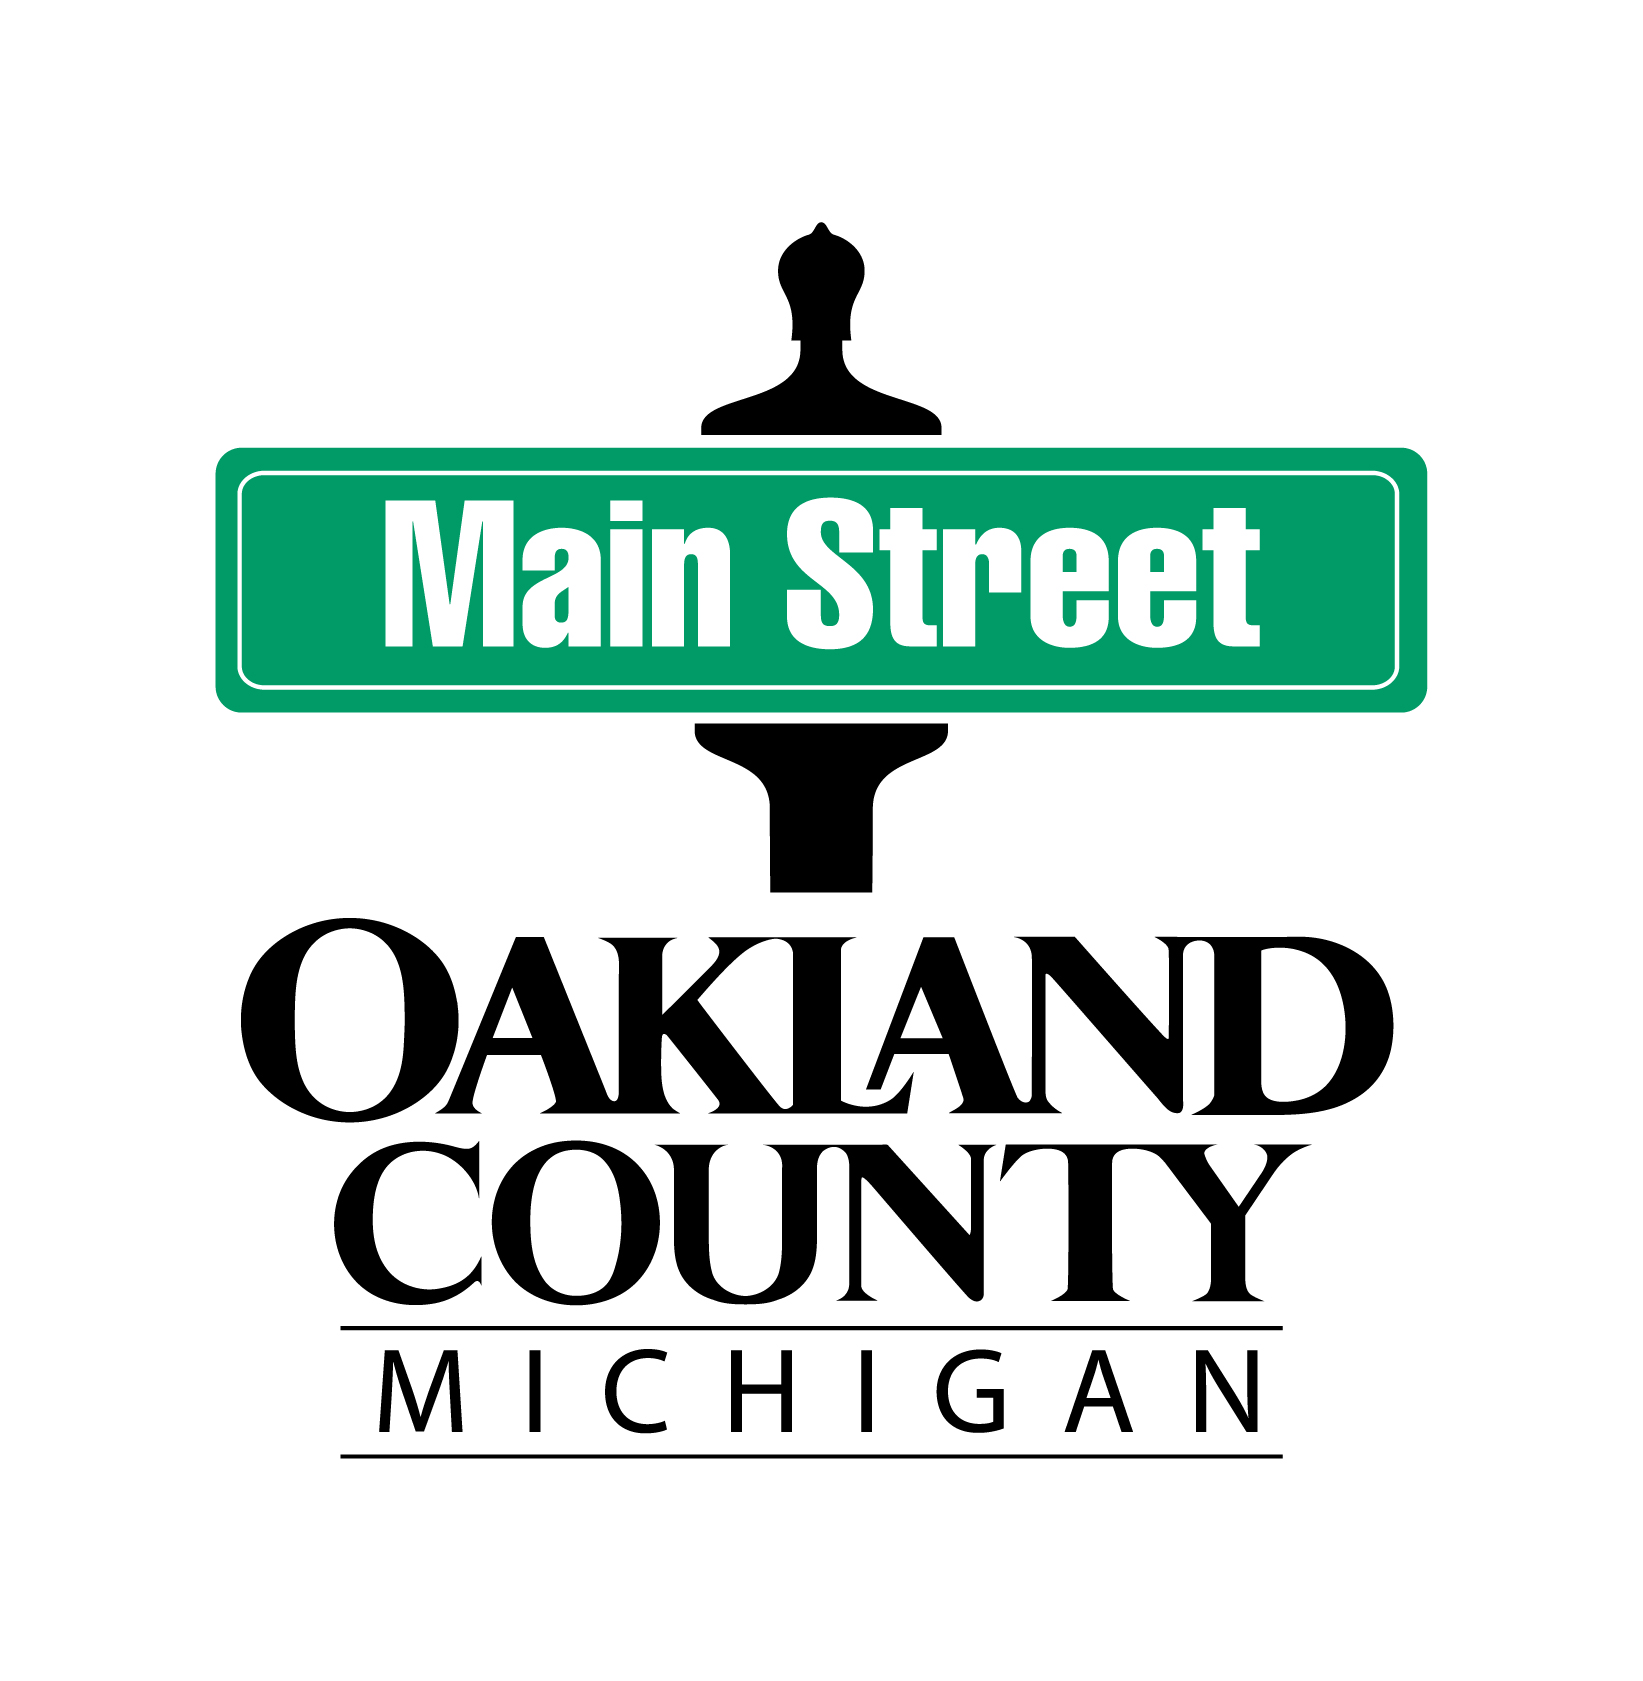 Mainstreet Logo